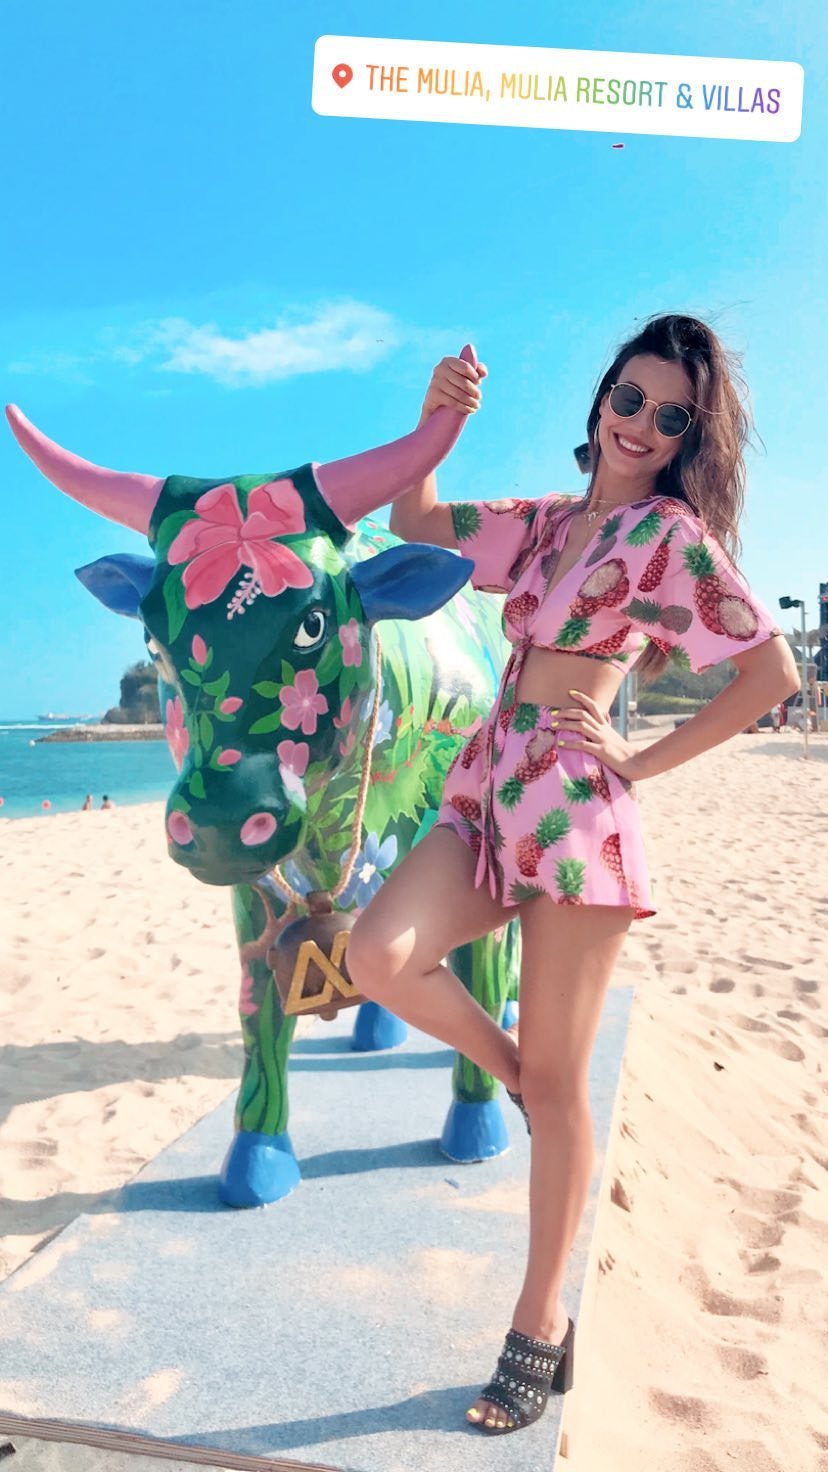 Victoria Justice and Madison Beer in Bikini â€“ Social Media Pics